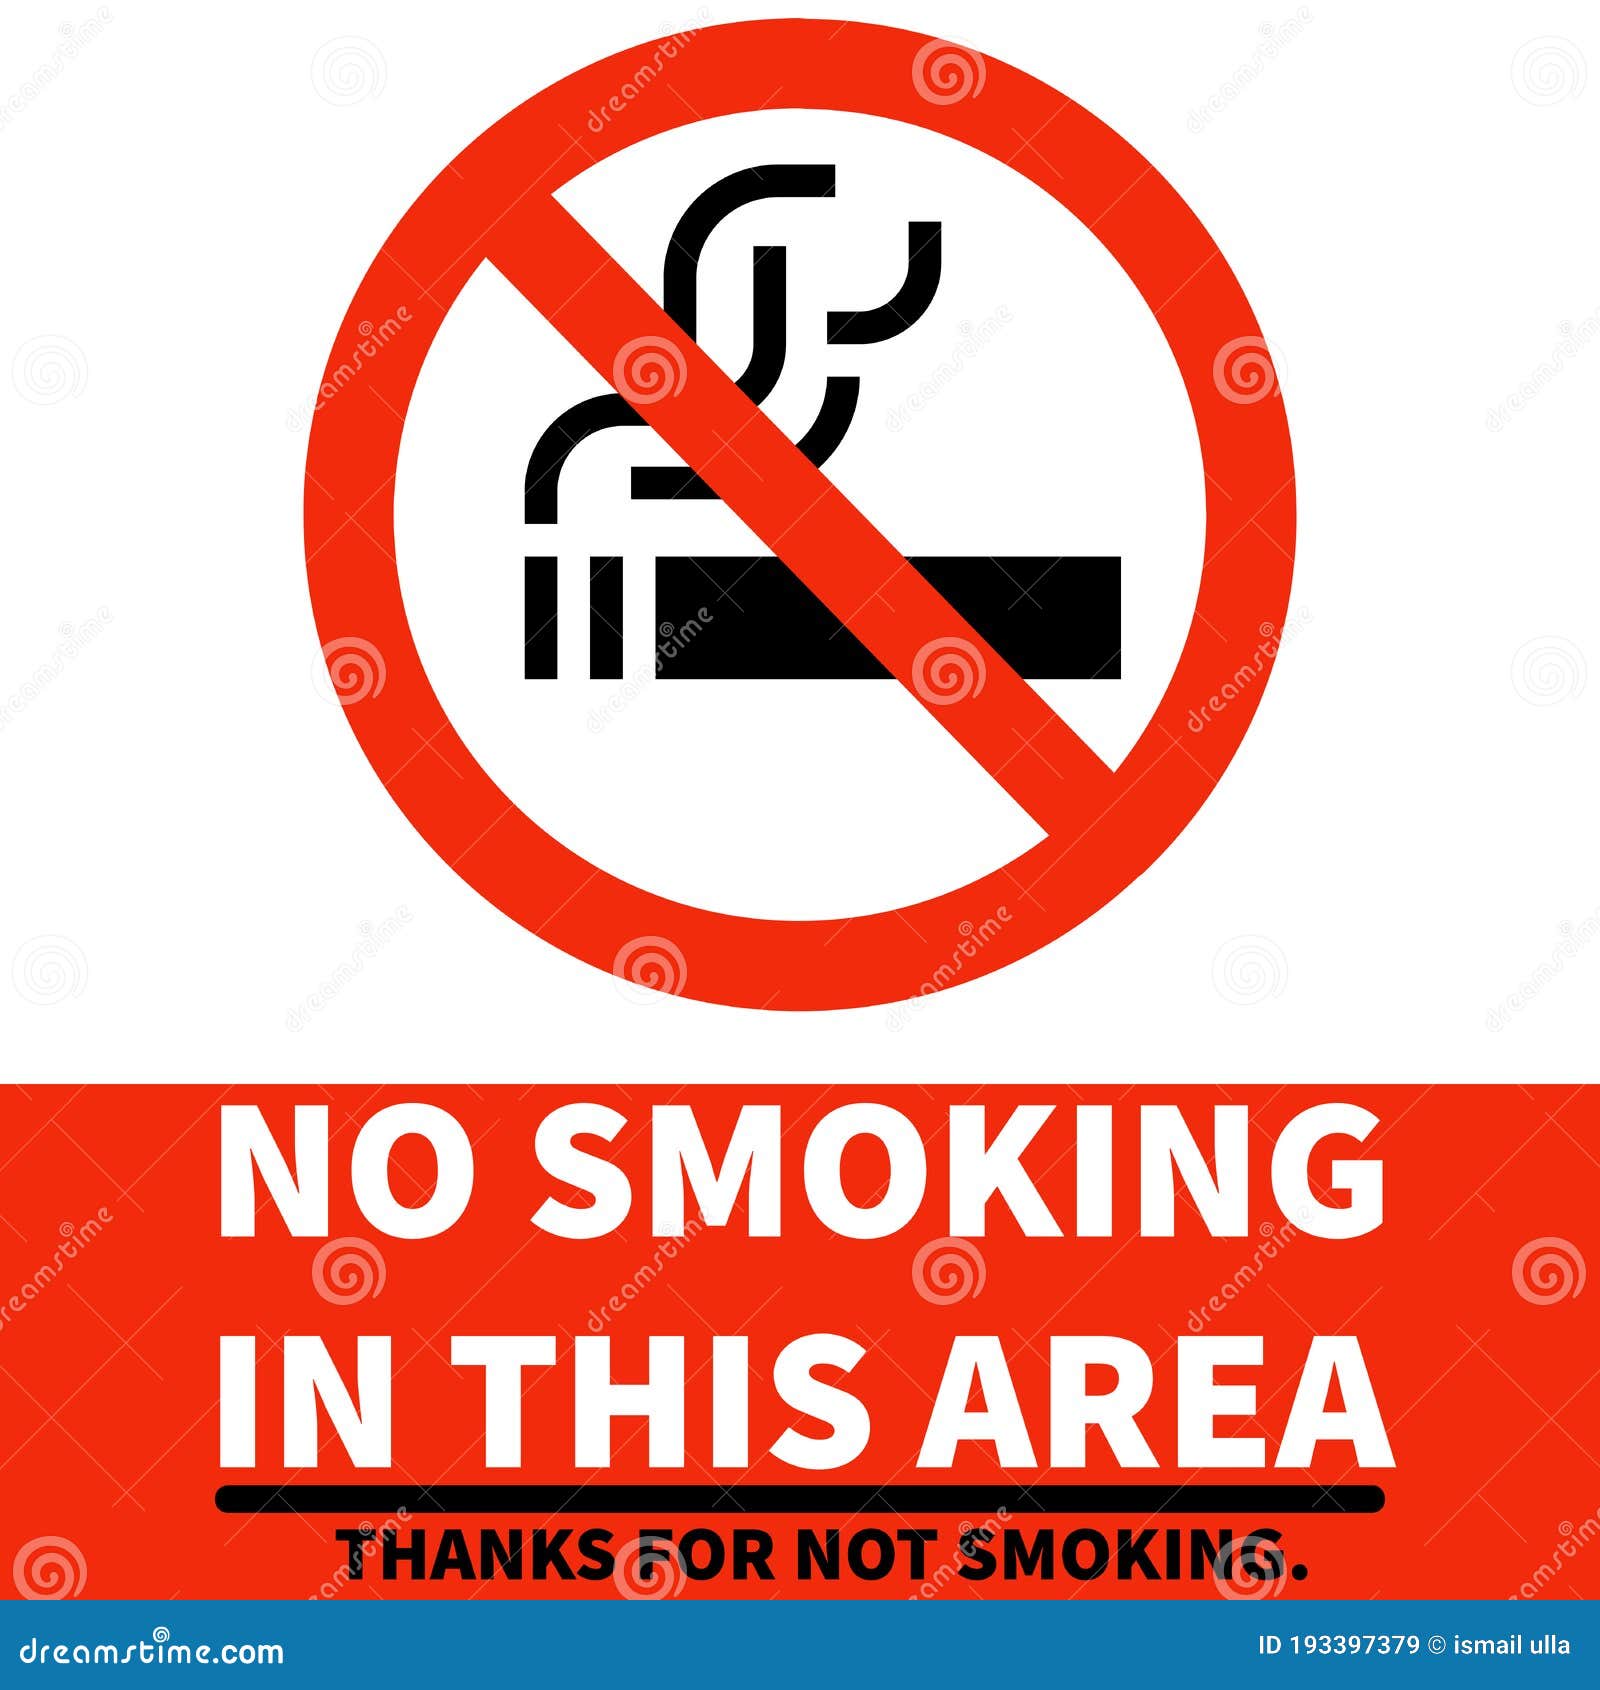 Free Printable No Smoking Signage